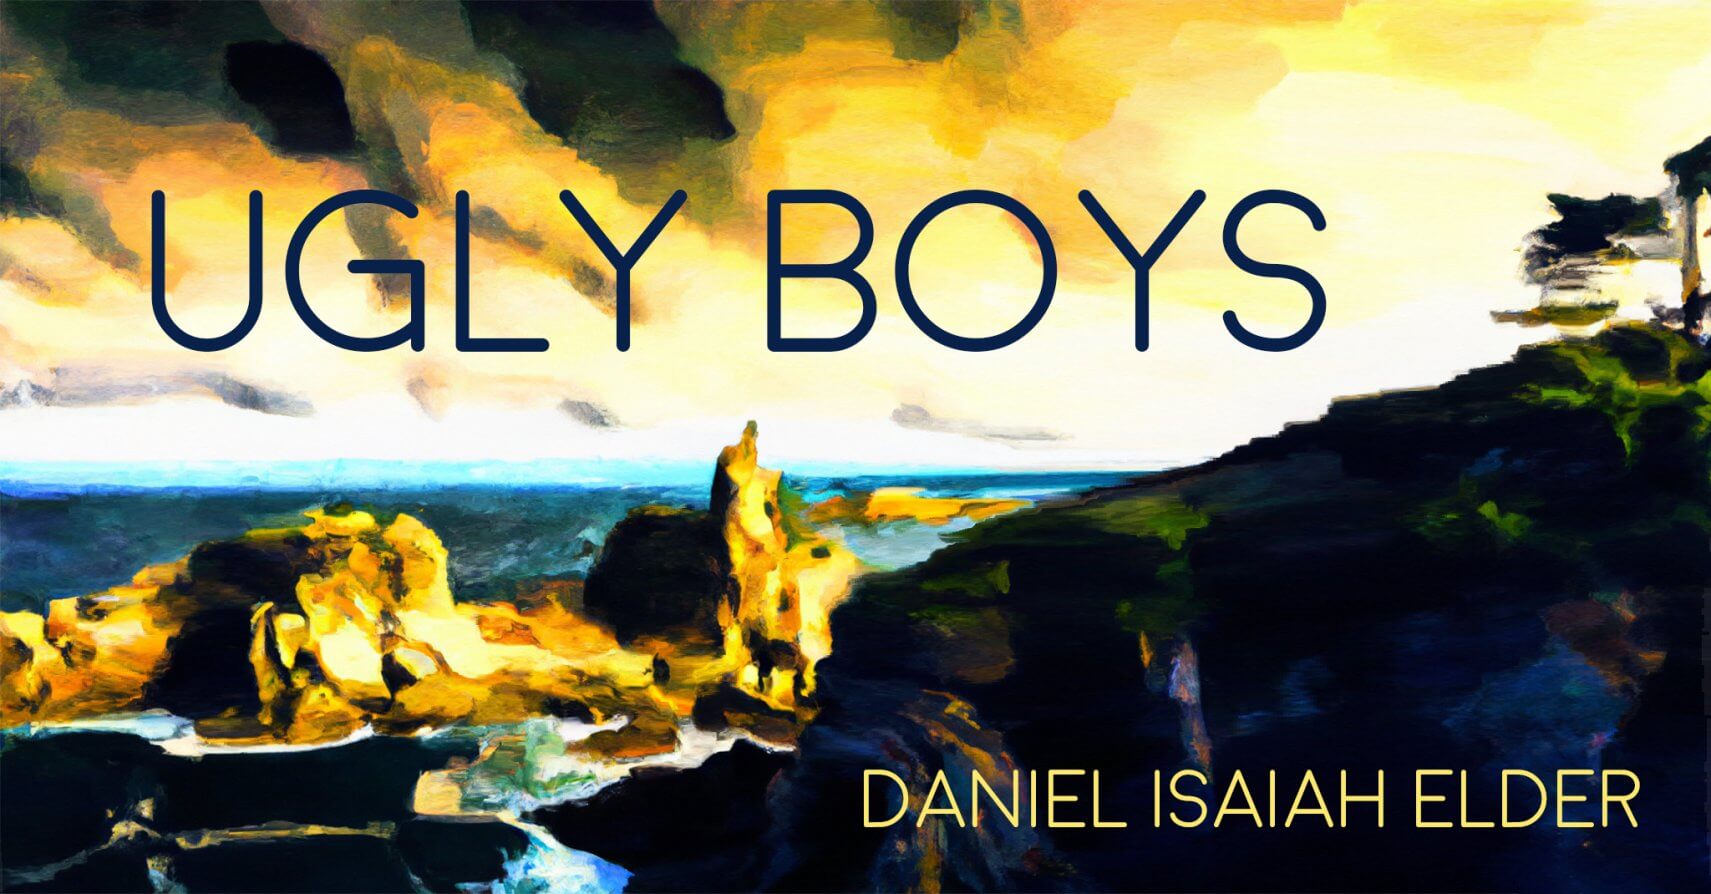 UGLY BOYS by Daniel Isaiah Elder